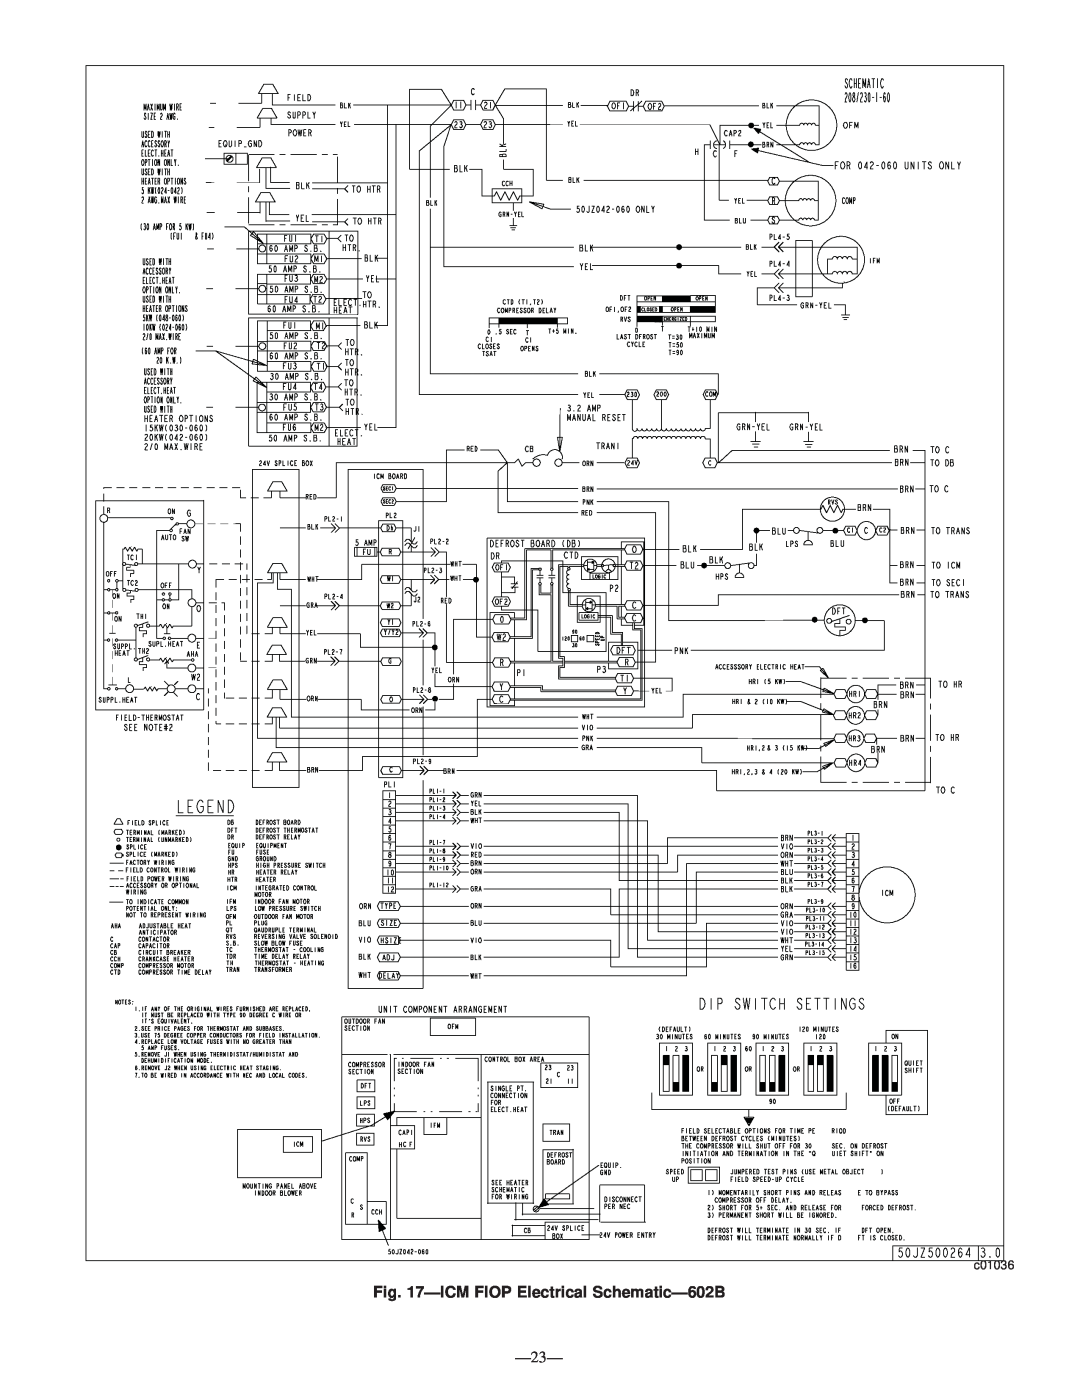 Bryant 583B, 702B, 683B installation instructions ÐICM FIOP Electrical SchematicÐ602B, Ð23Ð 